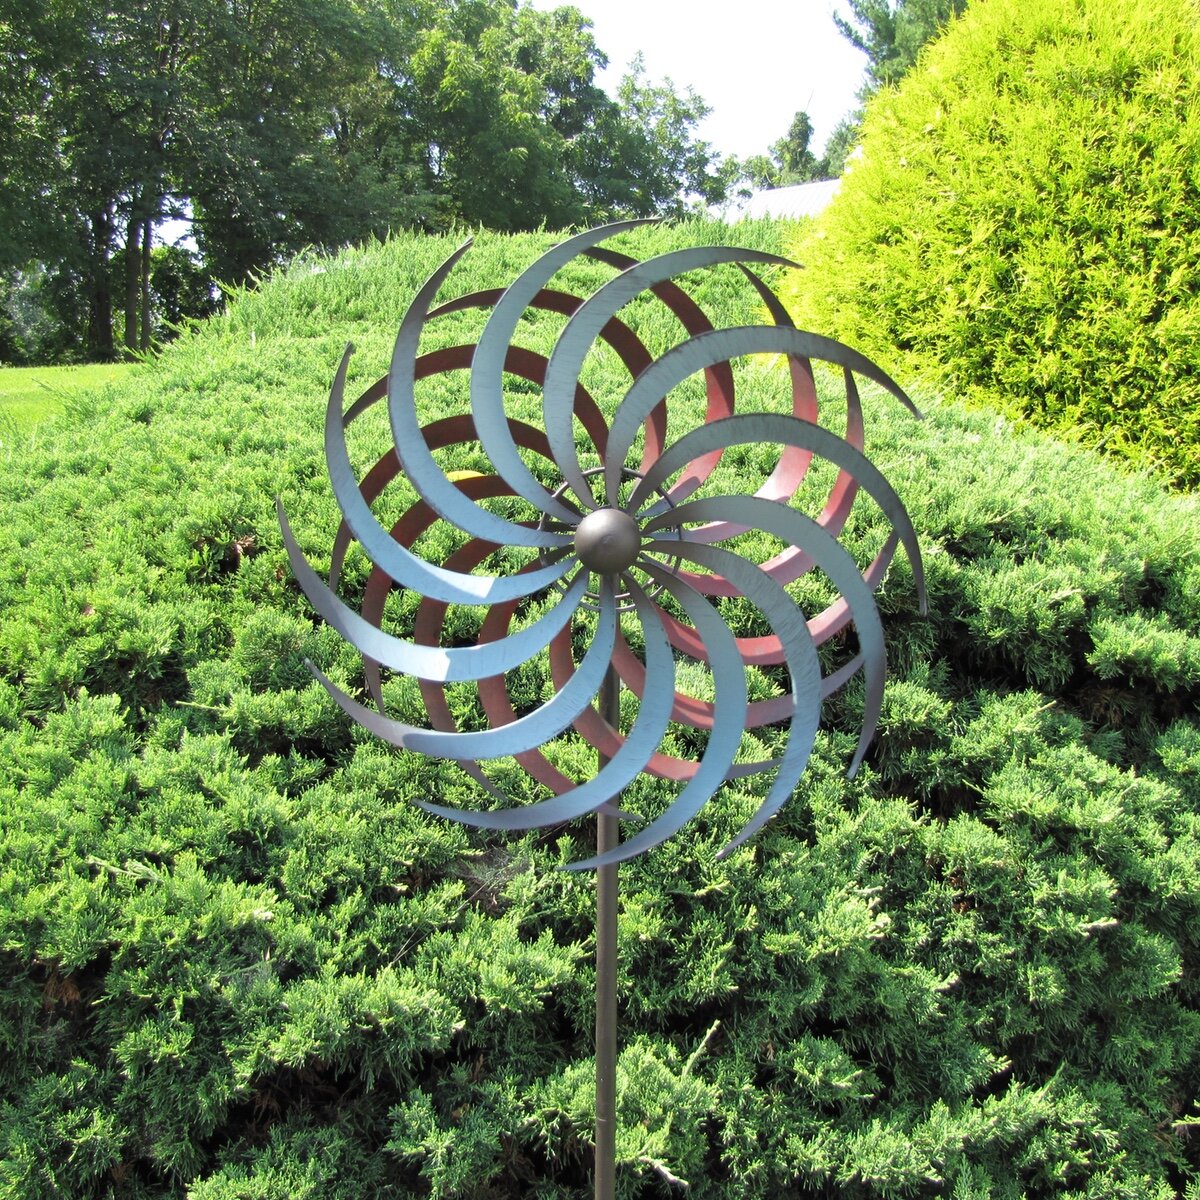 Rustic Metal Garden Art Double Pinwheel Yard Wind Spinner Lawn Ornament Decor 